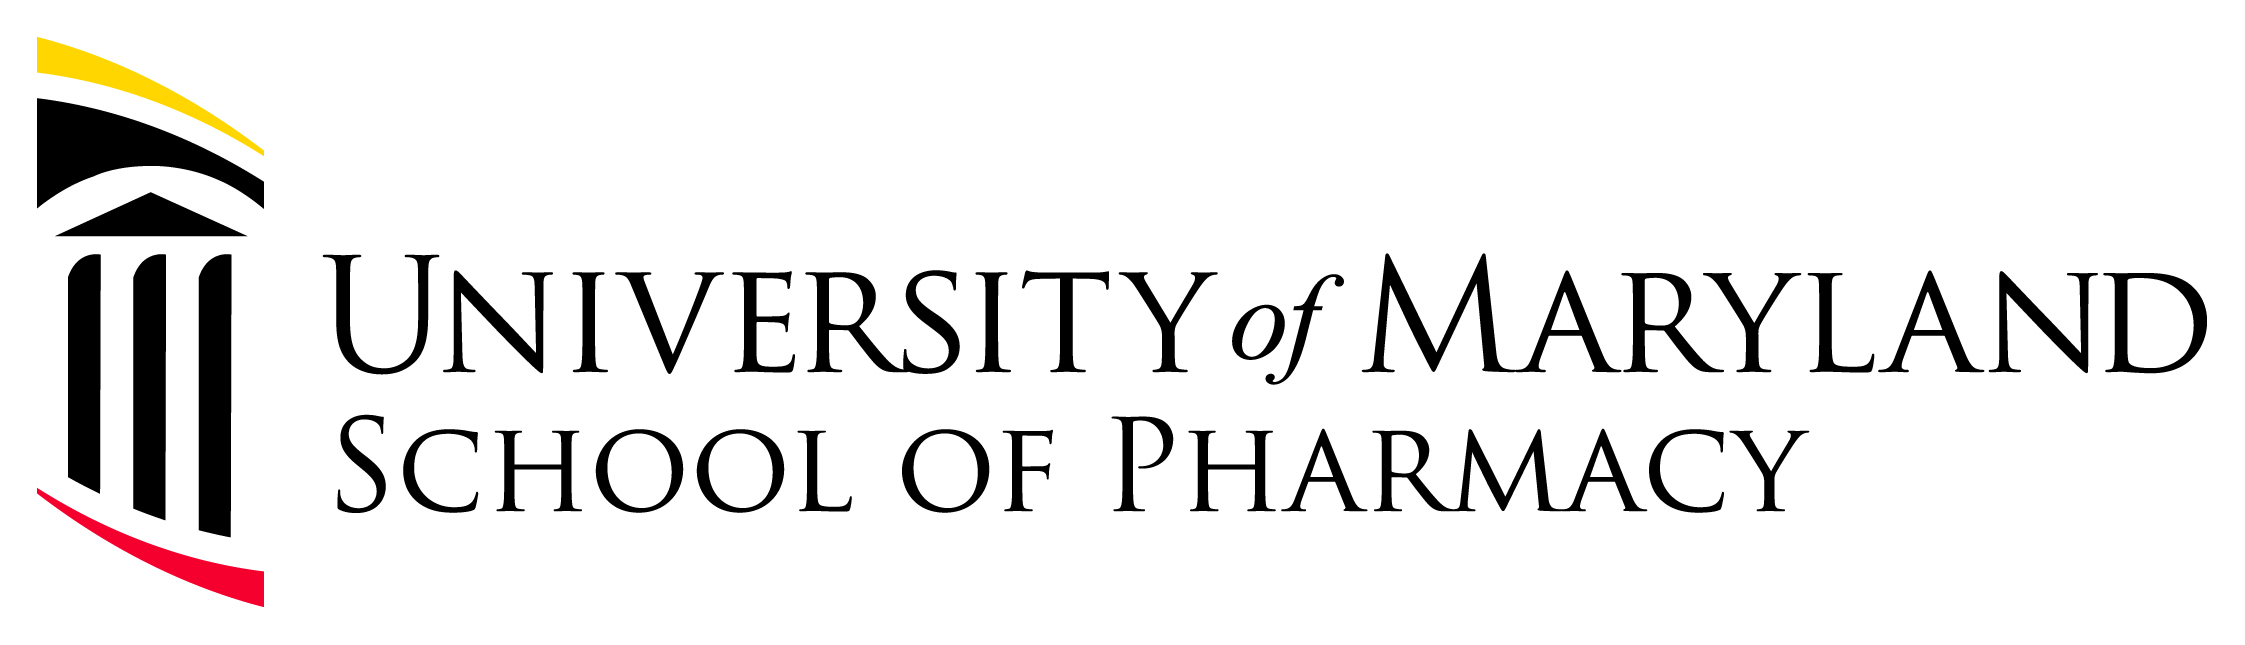 University of Maryland School of Pharmacy